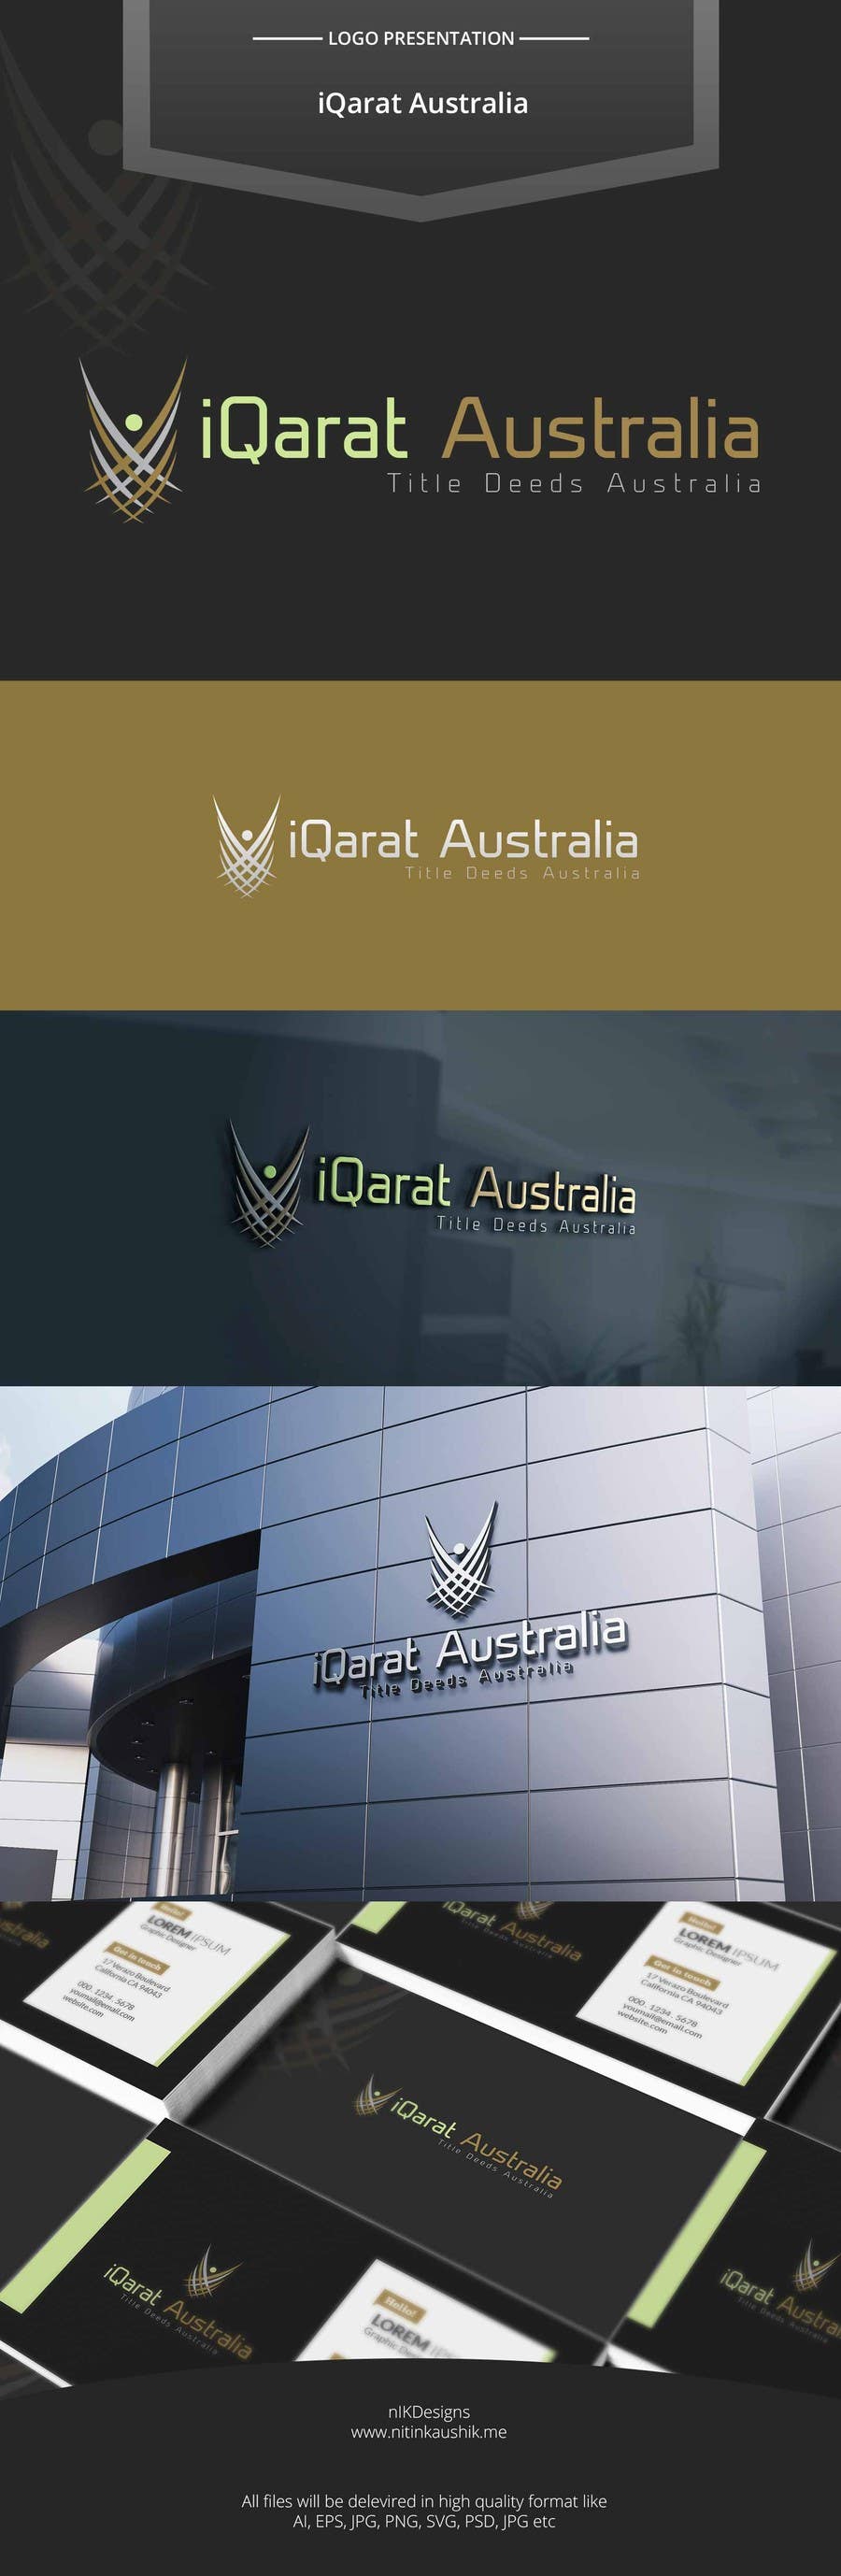 Contest Entry #89 for                                                 Design a Logo for an premium facilitator ‘Off-Market’ property concierge business - iQarat Australia
                                            